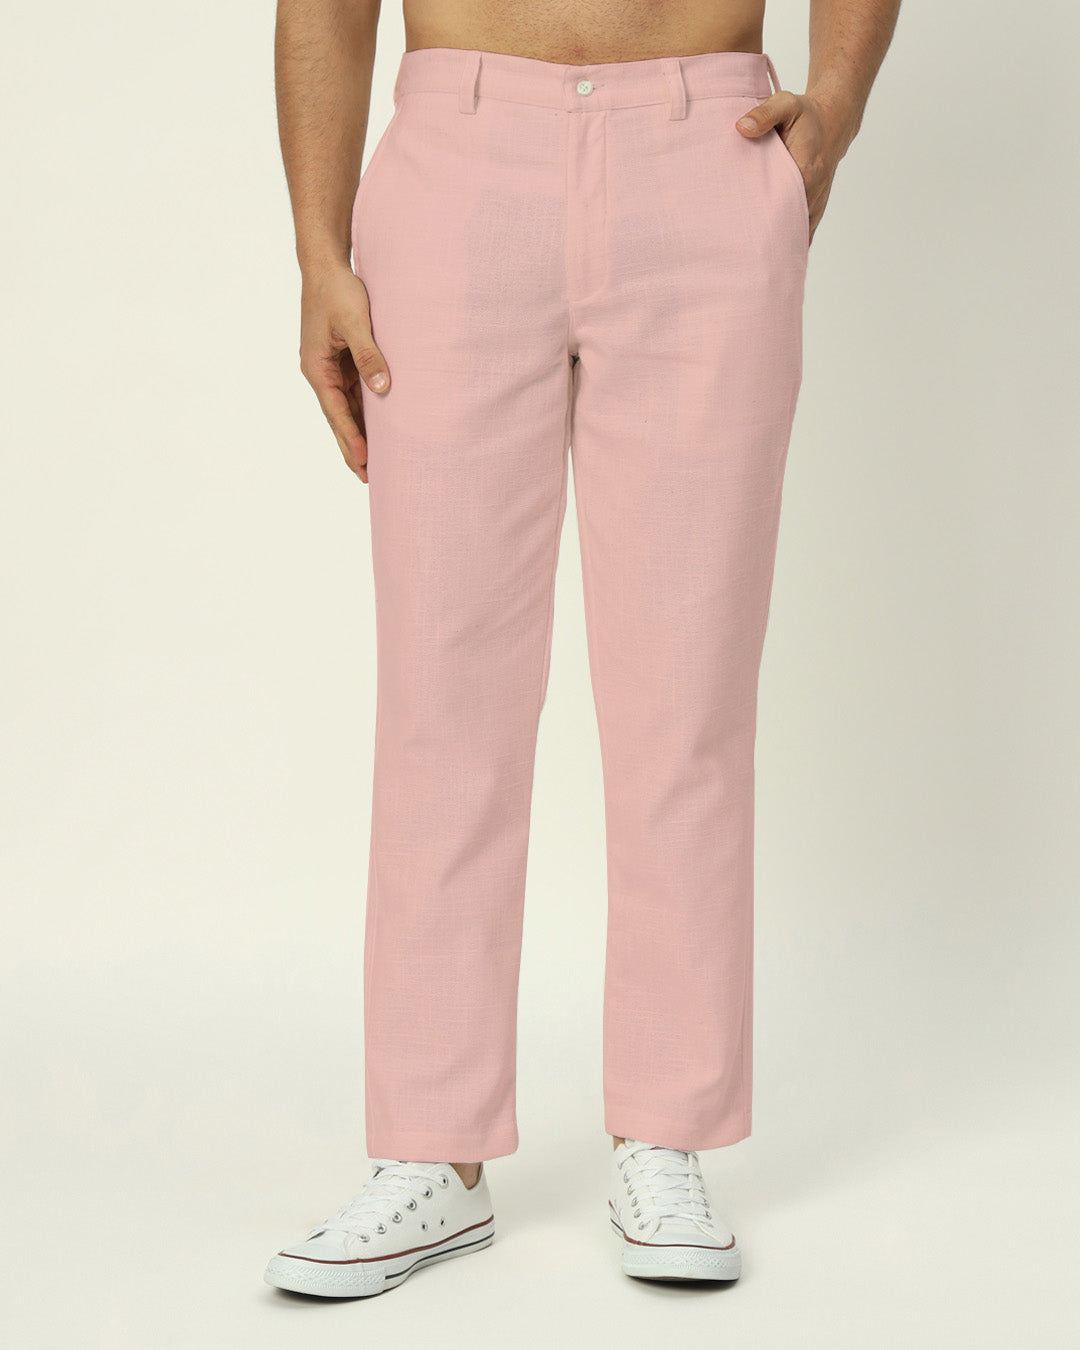 Modern Classic Fondant Pink Men's Pants